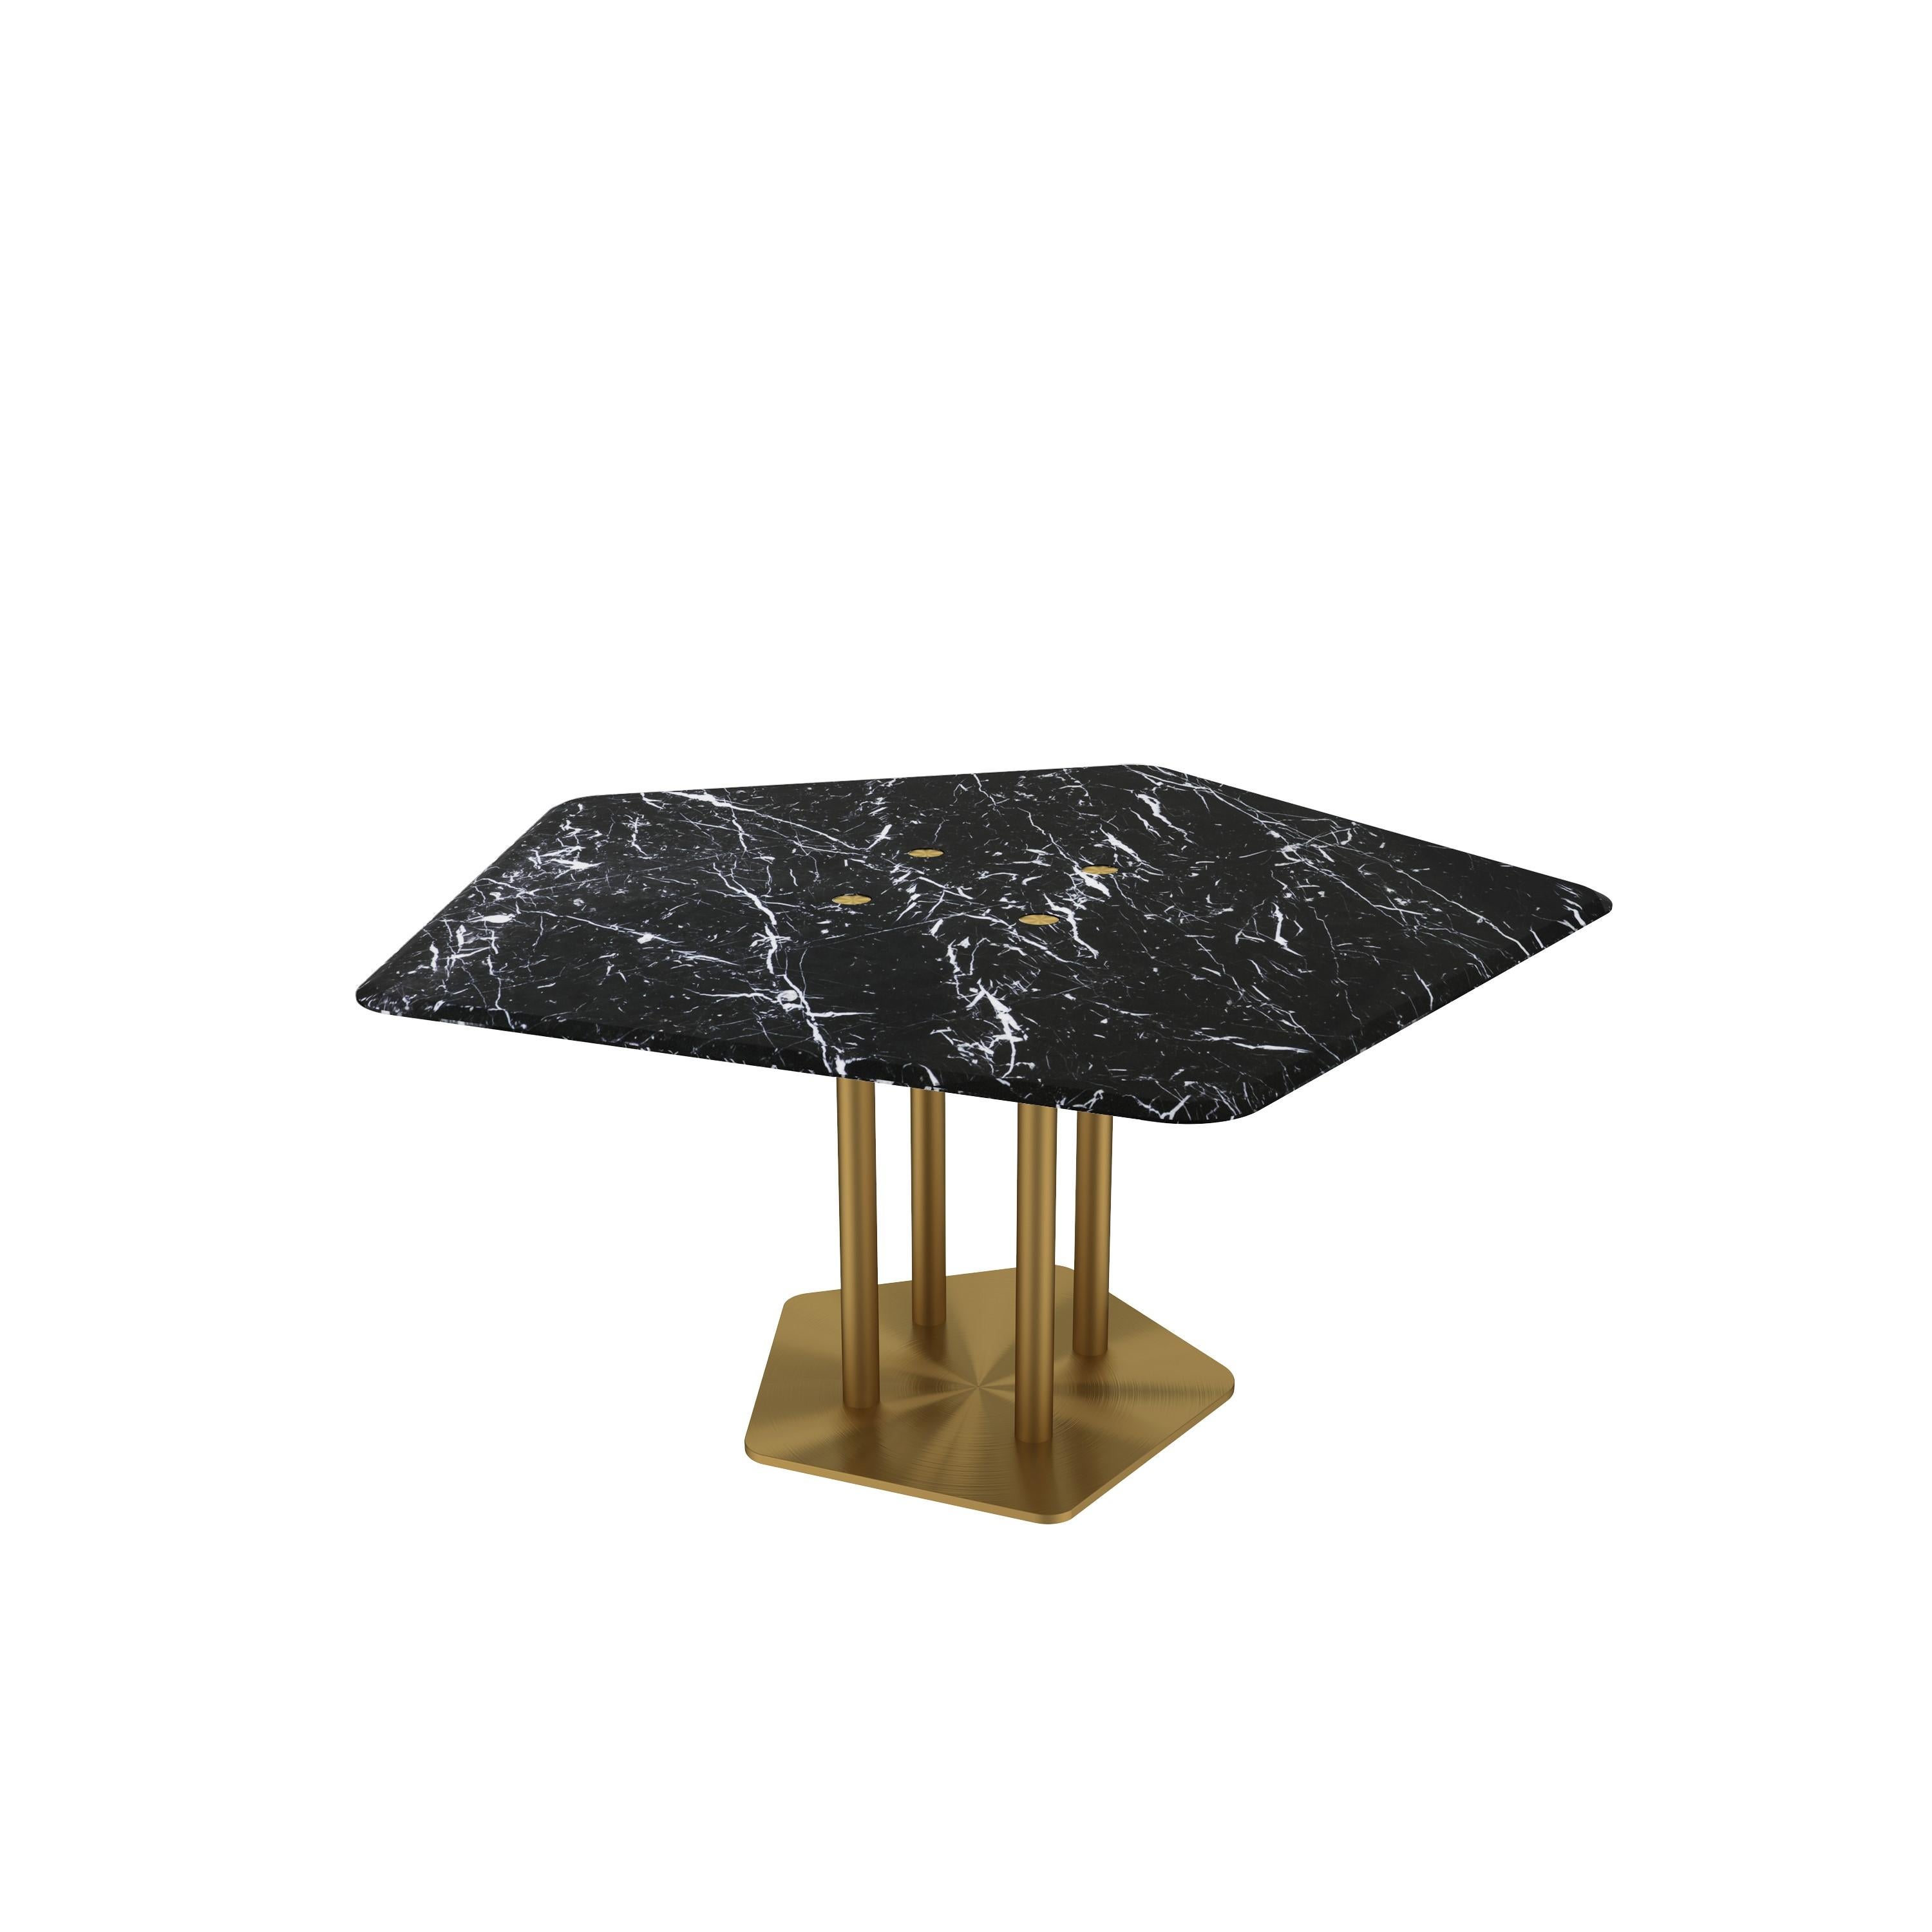 Chinese NORDST ELI Dining Table, Italian Grey Rain Marble, Danish Modern Design, New For Sale